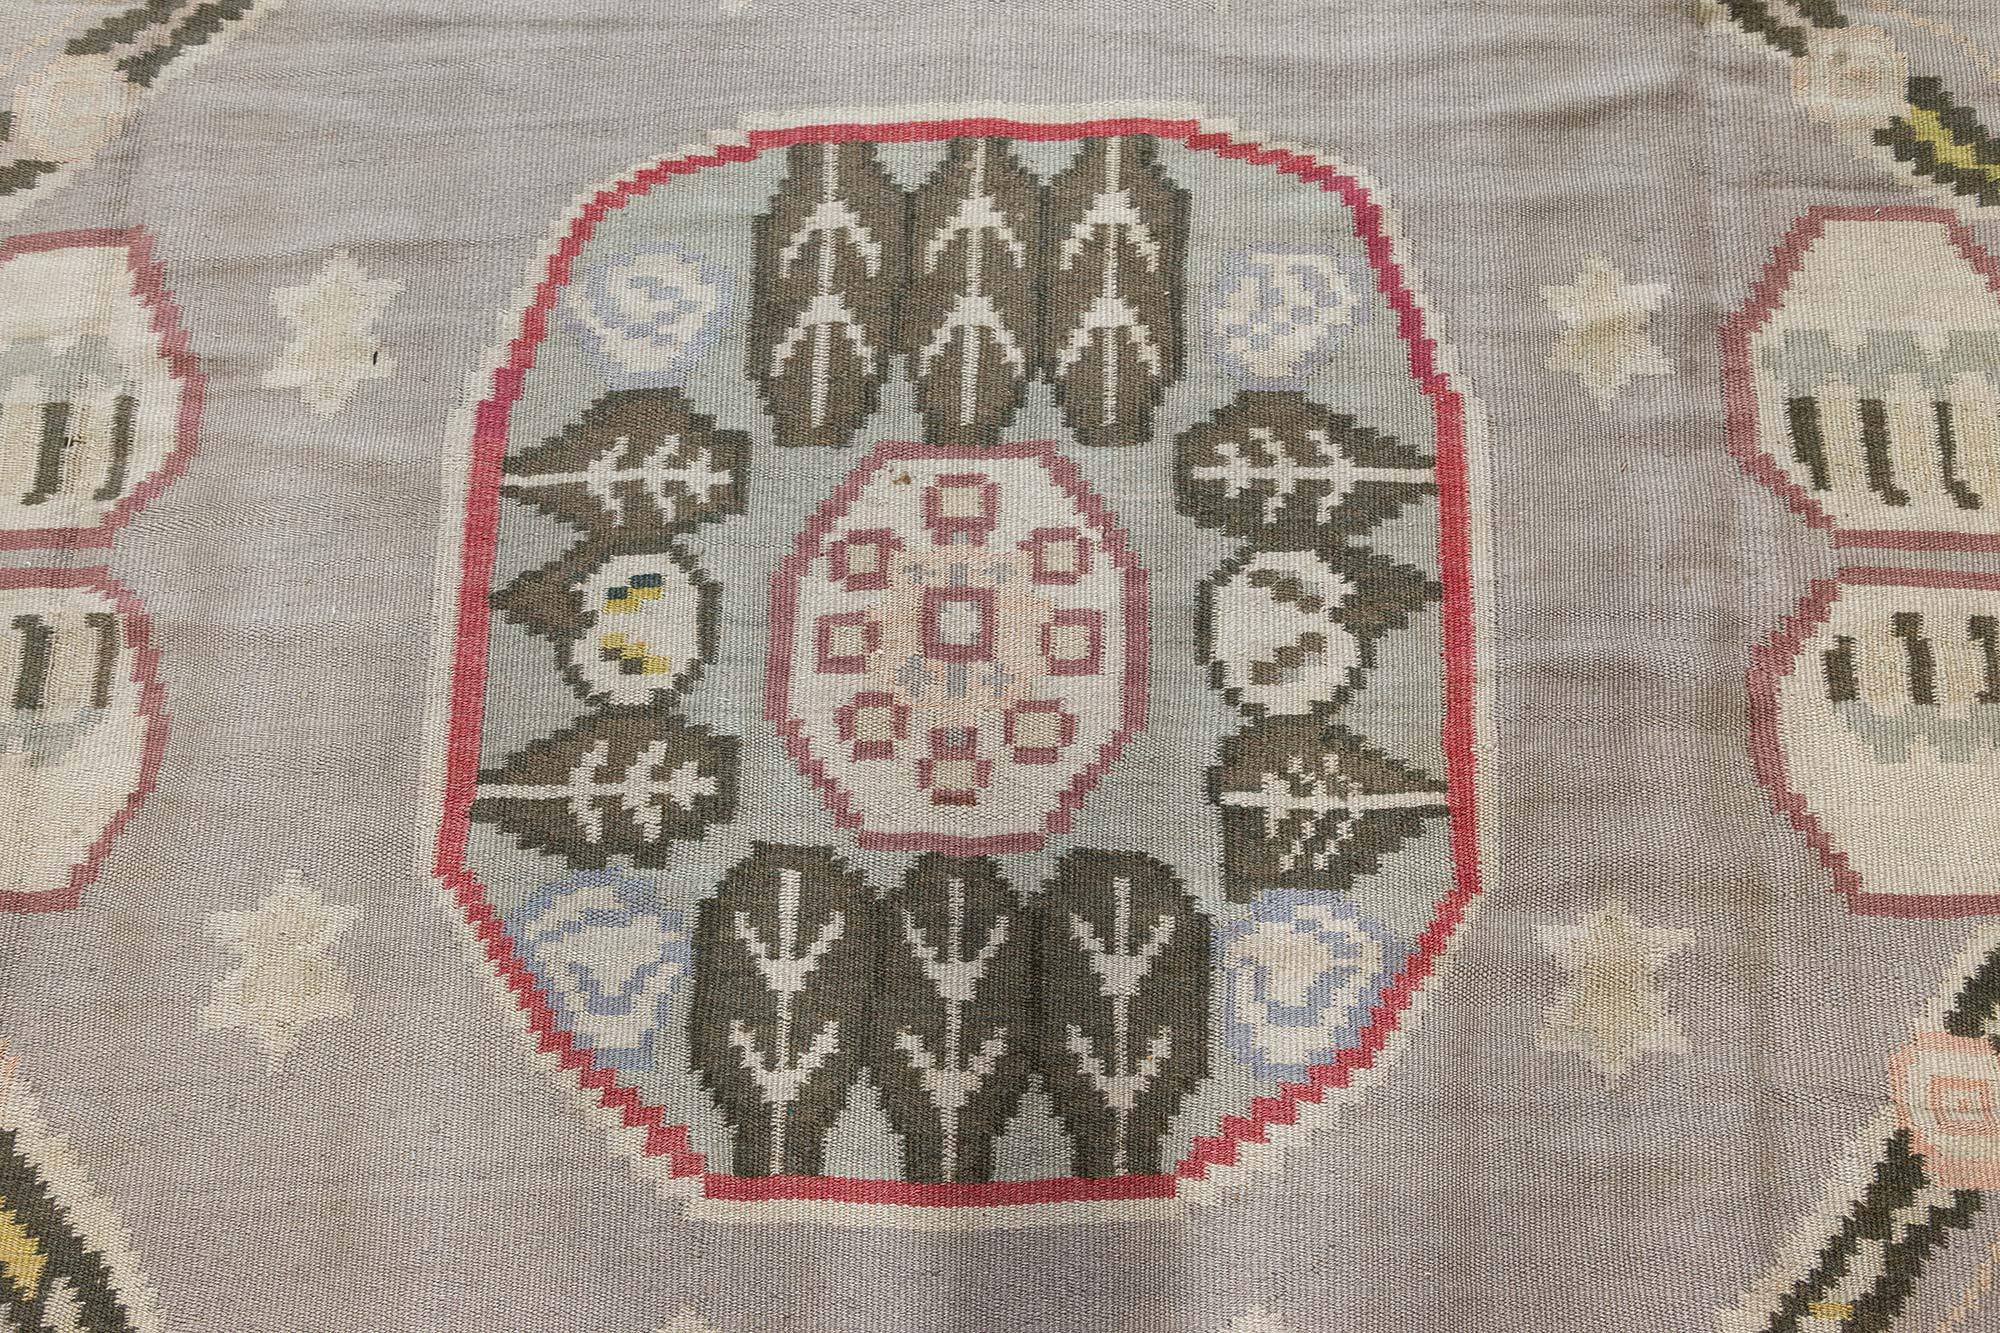 High-quality Vintage Bessarabian abstract handmade wool rug.
Size: 9'3